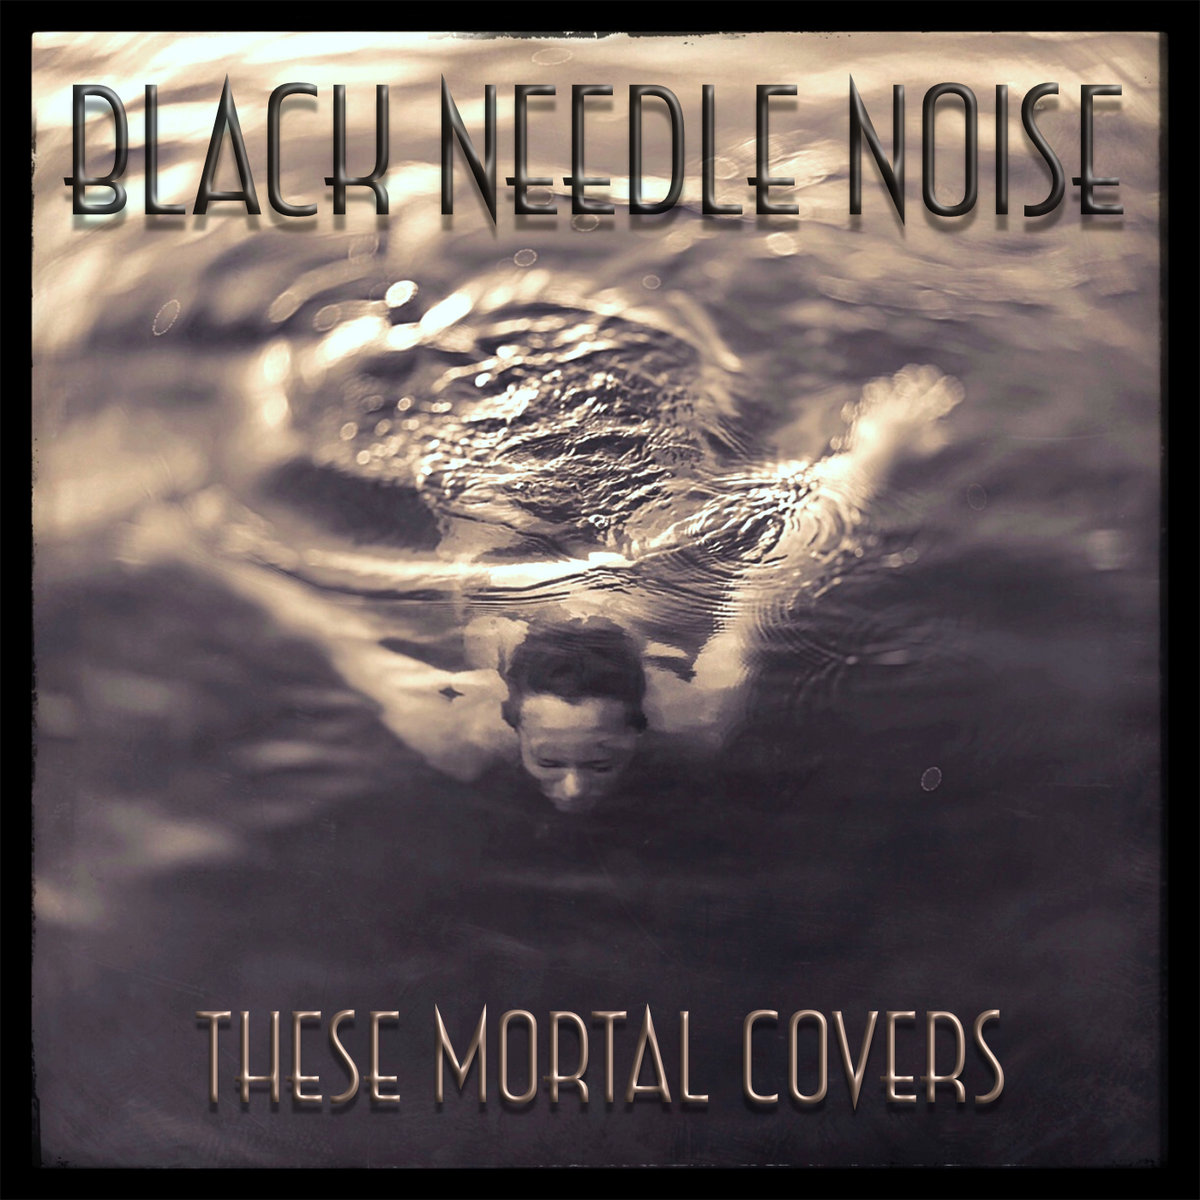 Black Needle Noise - These Mortal Covers - Black Needle Noise - These Mortal Covers